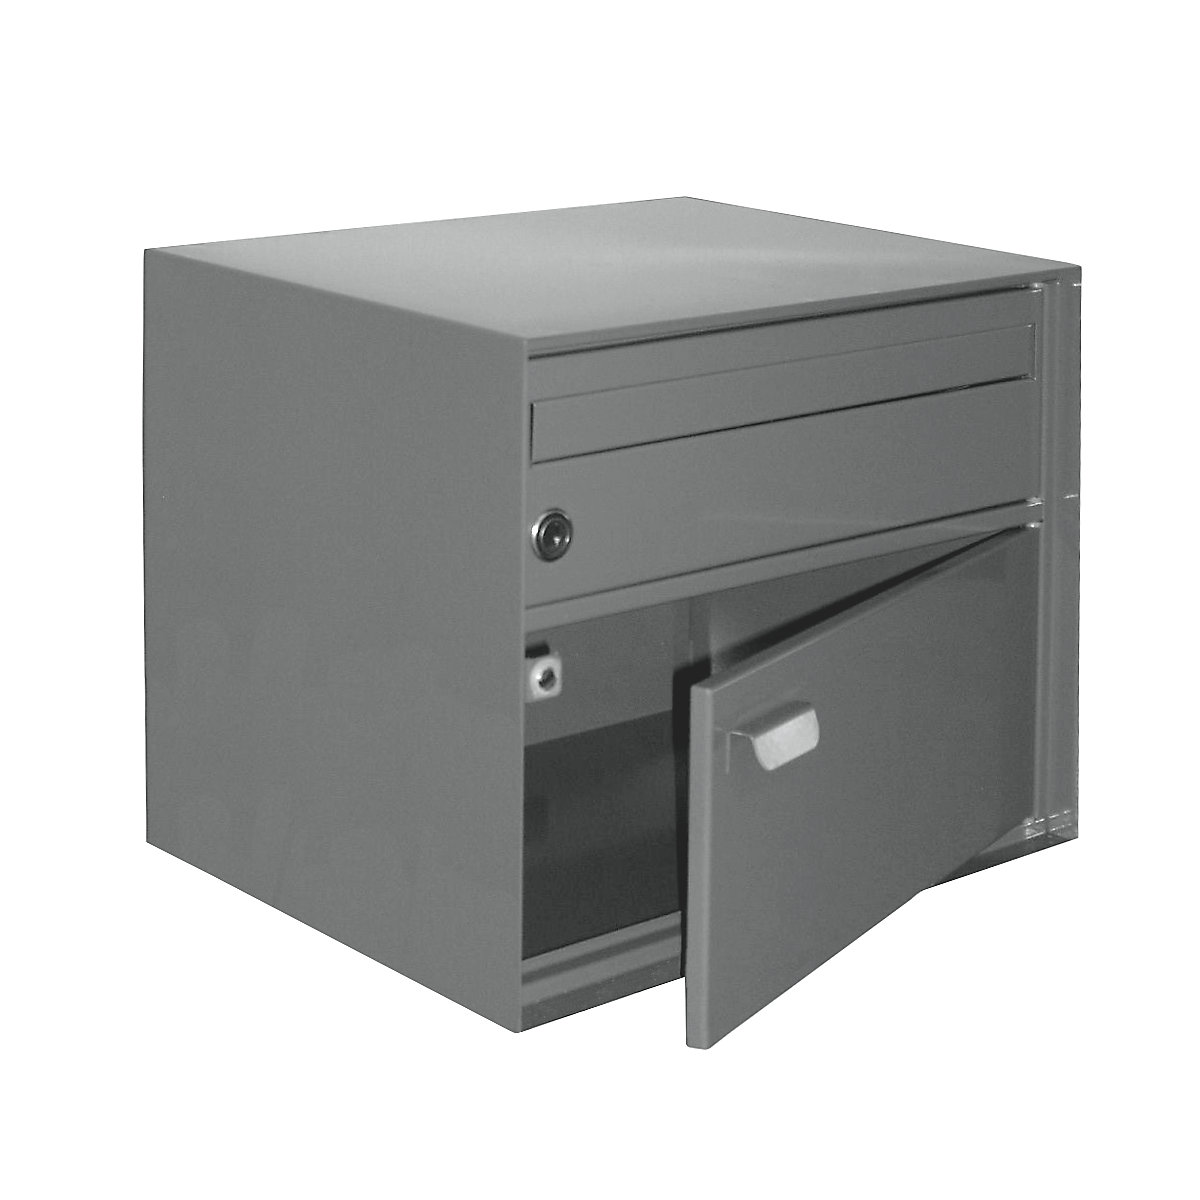 Letter box, WxHxD 390 x 315 x 310 mm, sheet steel, powder coated, grey-5